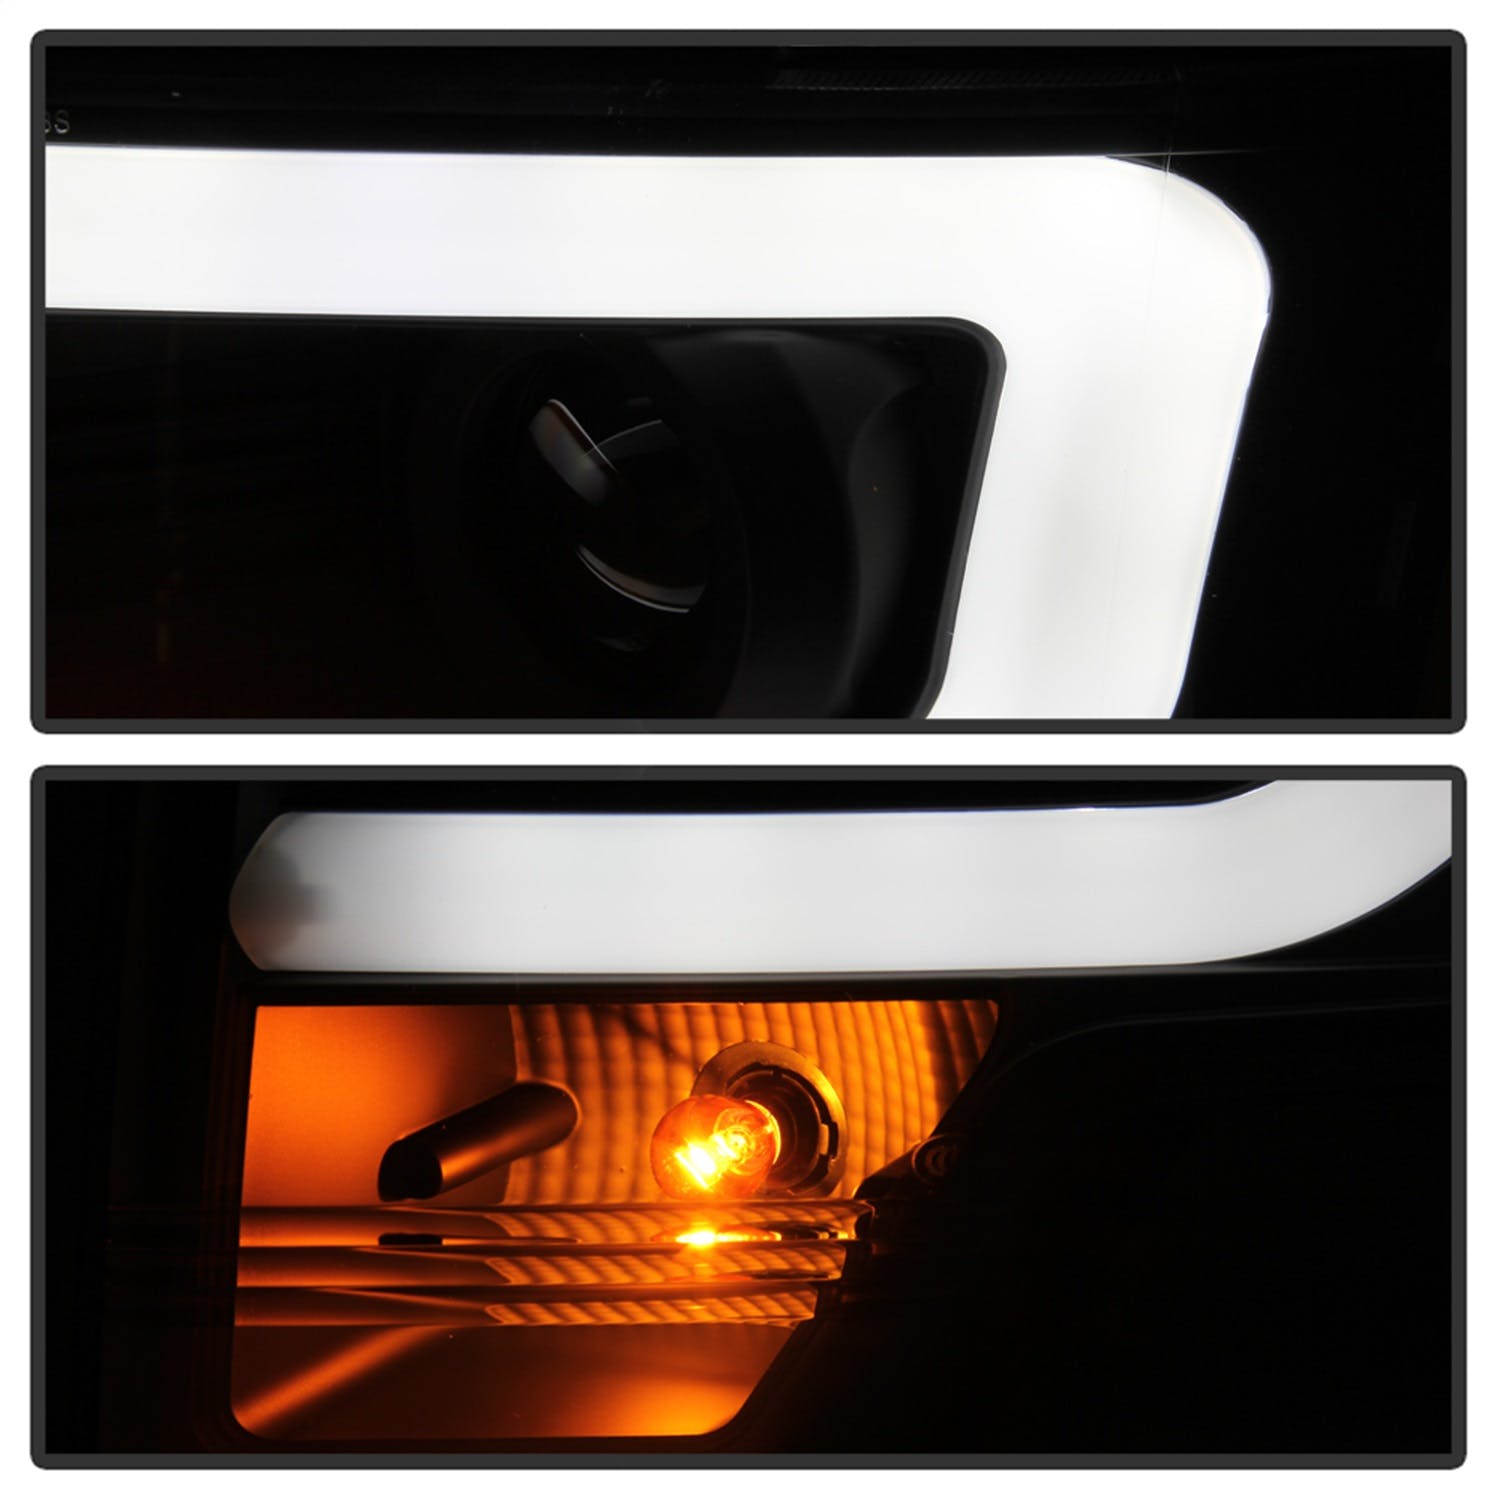 Spyder Auto 5087591 LED Light Bar Projector Headlights